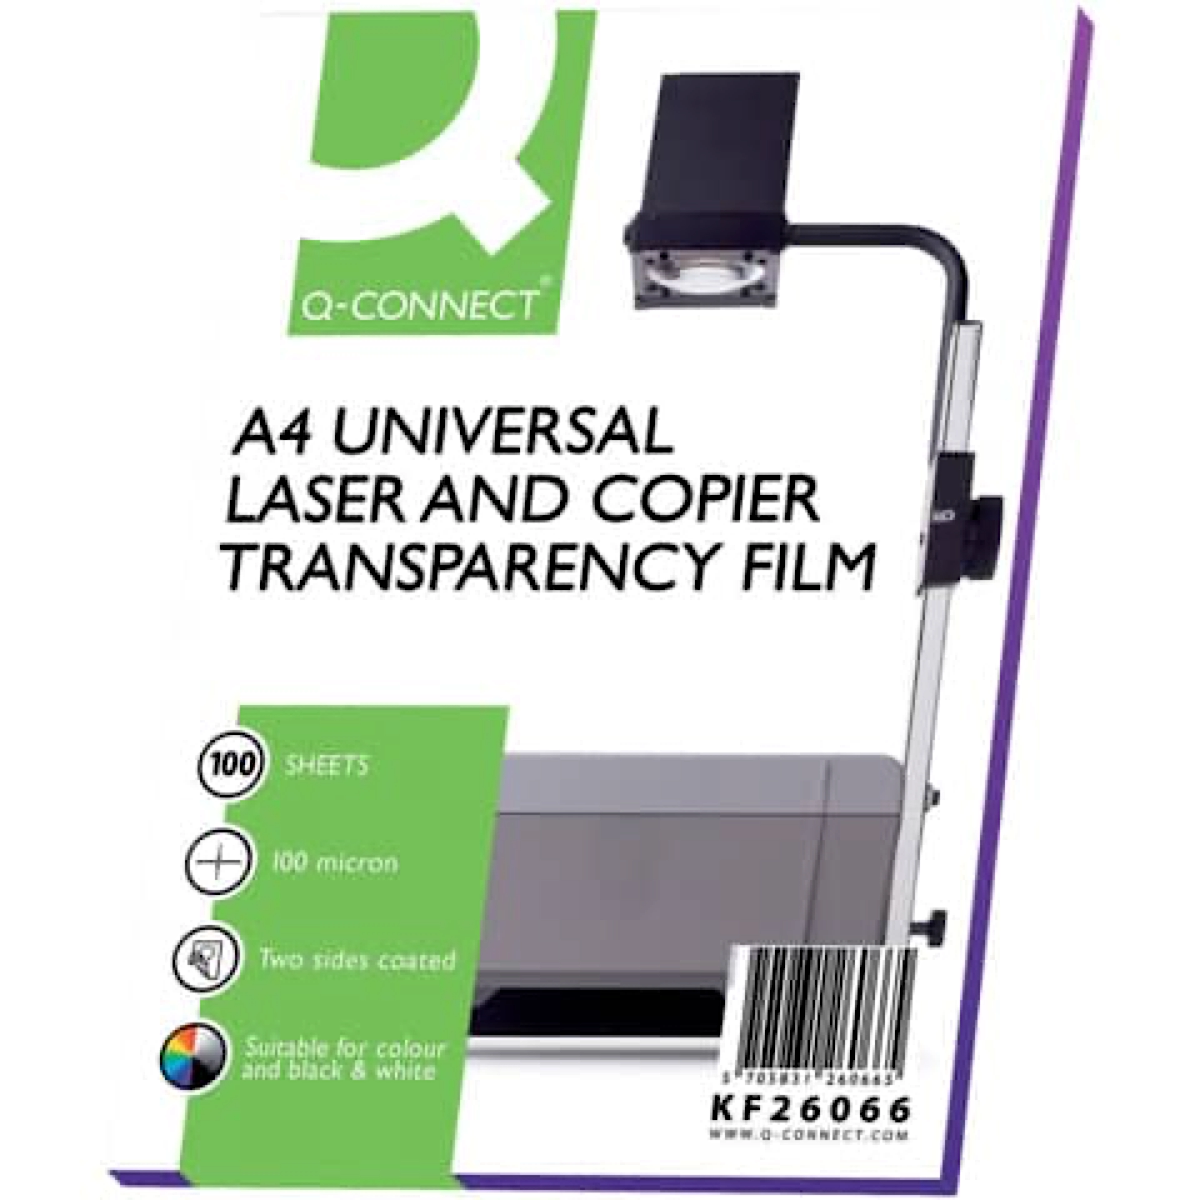 Bedruckbare Transparente Kopierfolie, DIN A4- Format, Q-CONNECT KF26066